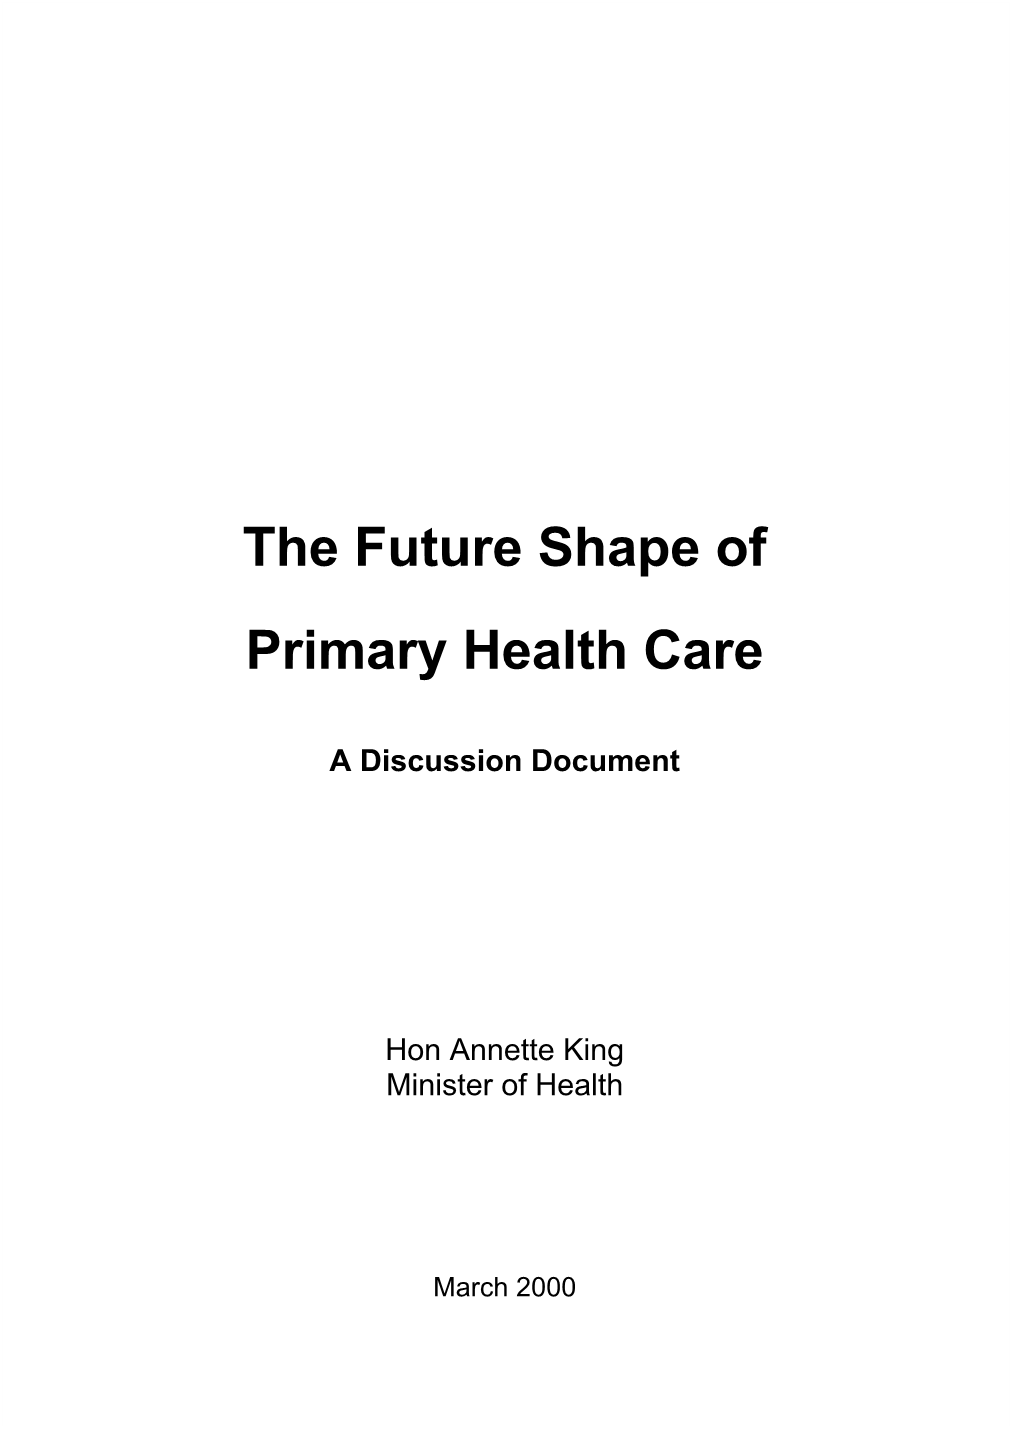 The Future Shape of Primary Health Care